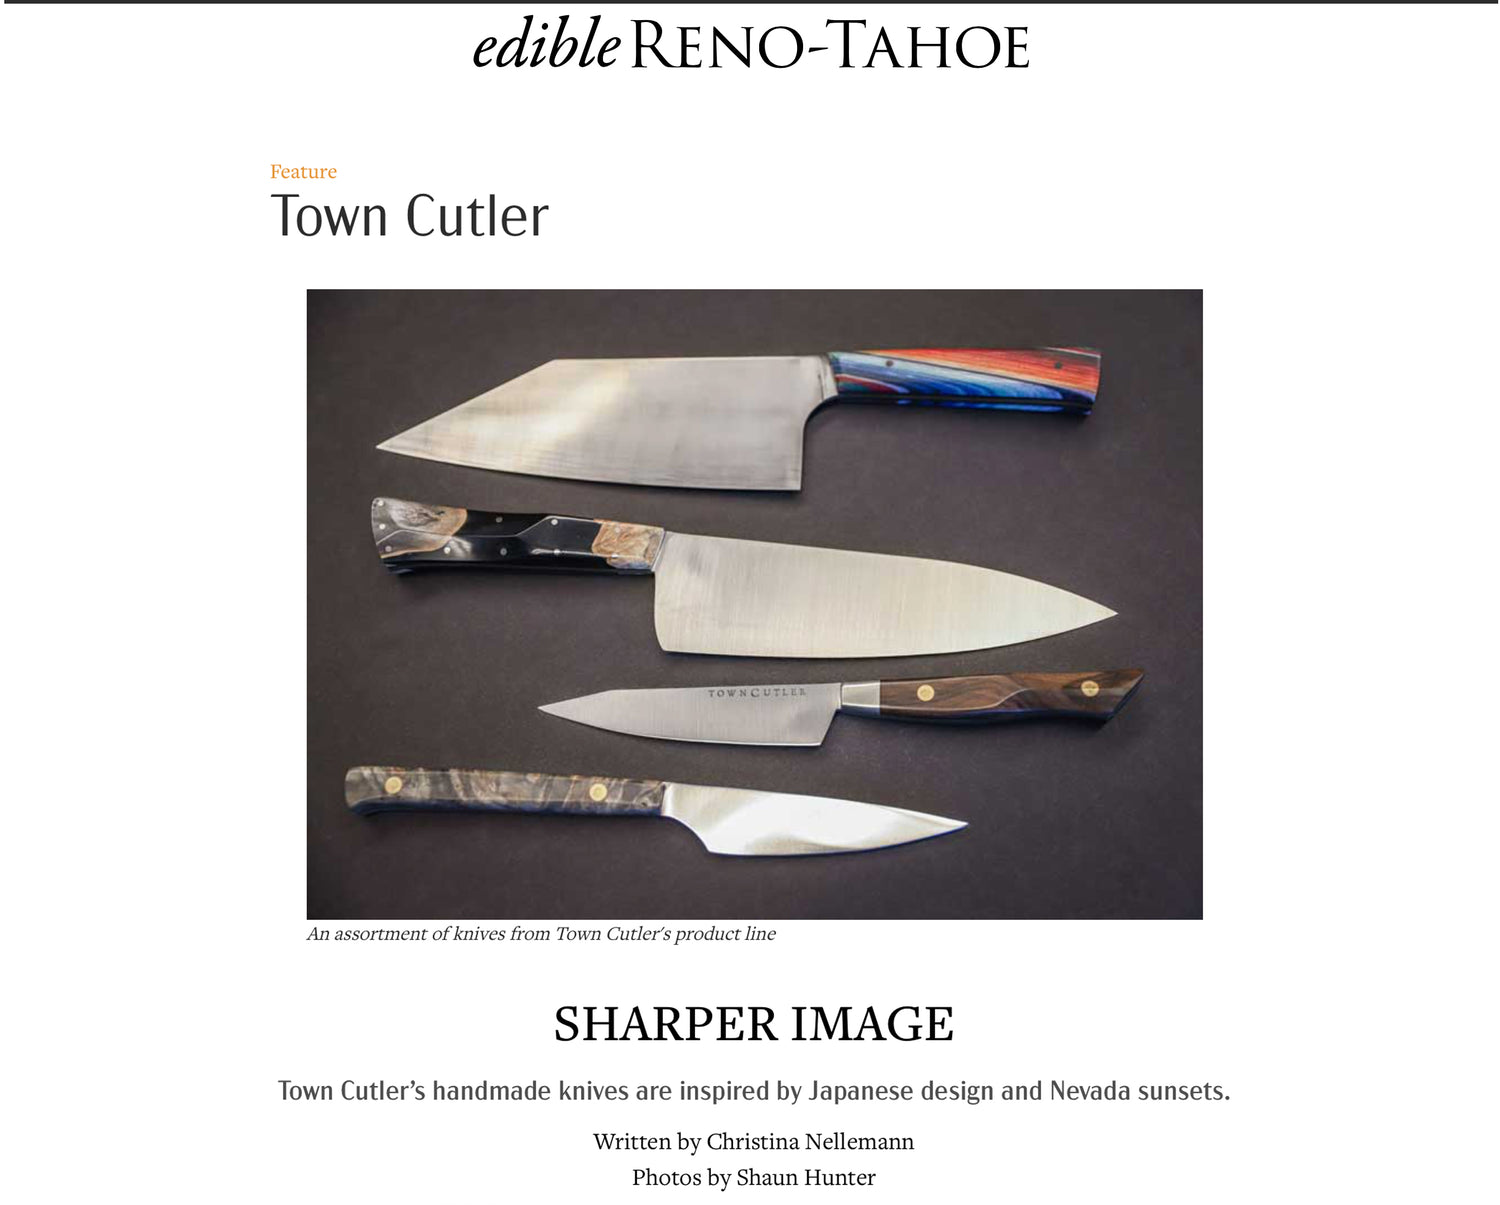 Edible Reno-Tahoe - Sharper Image, Town Cutler interview